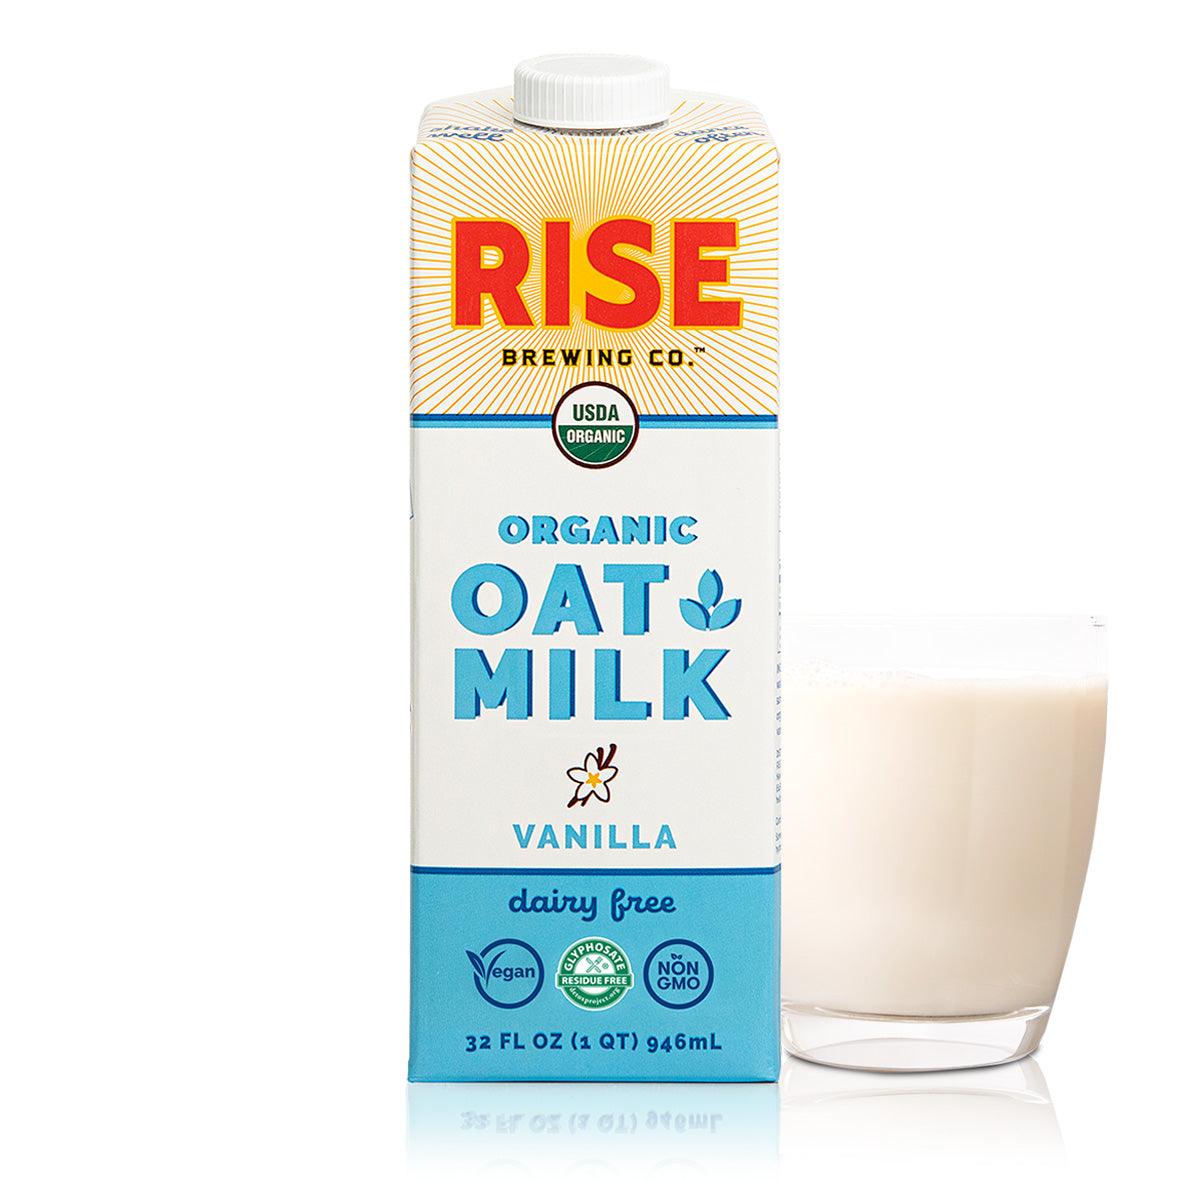 RISE Brewing Co. Organic Oat Milk Variety Pack - Vanilla 